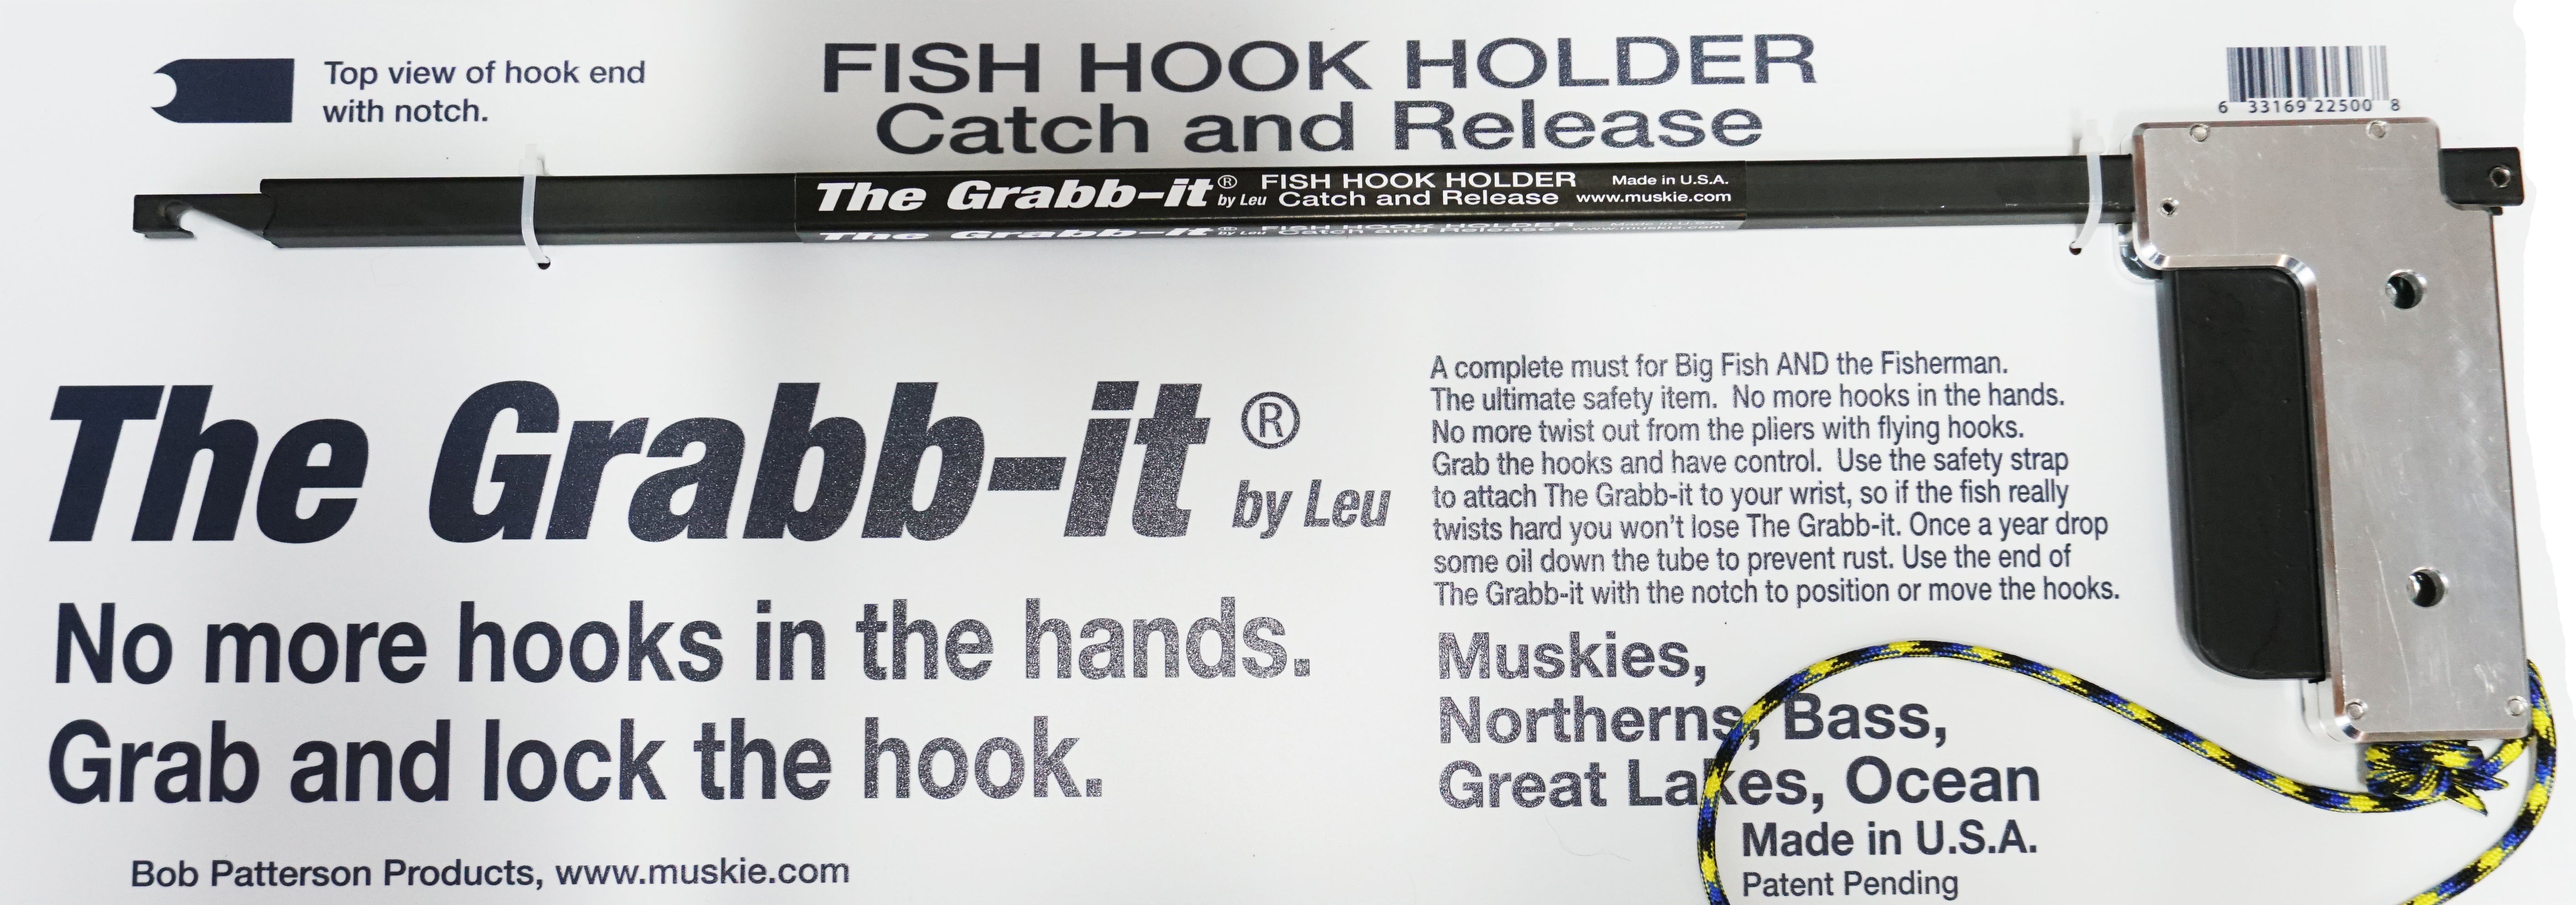 Grabb-It Hook Holder